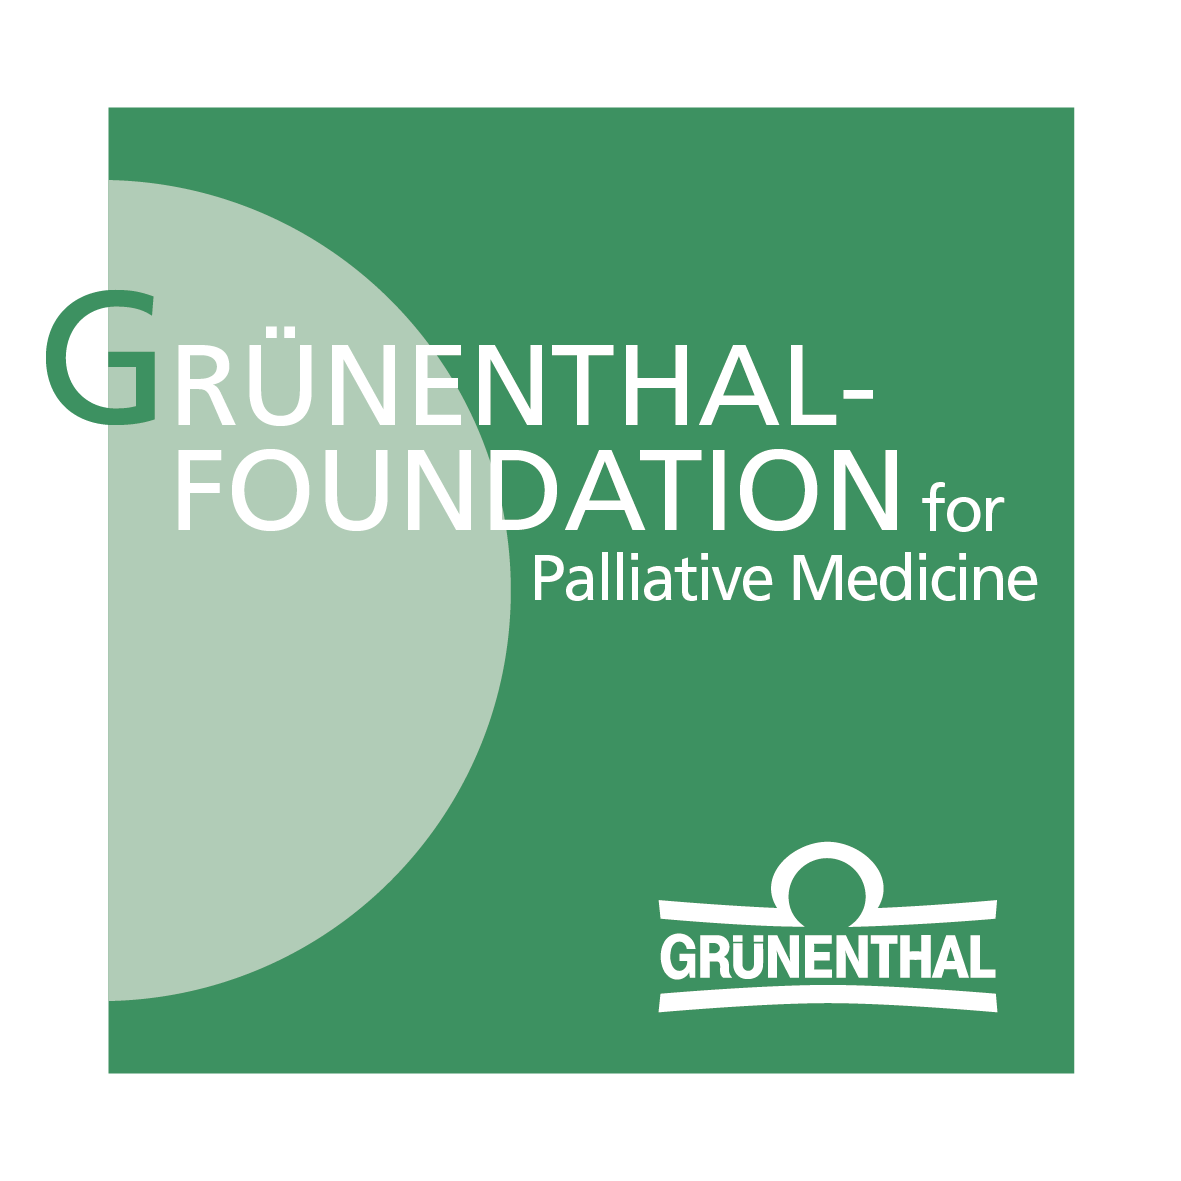 Grünenthal Foundation for Palliative Medicine